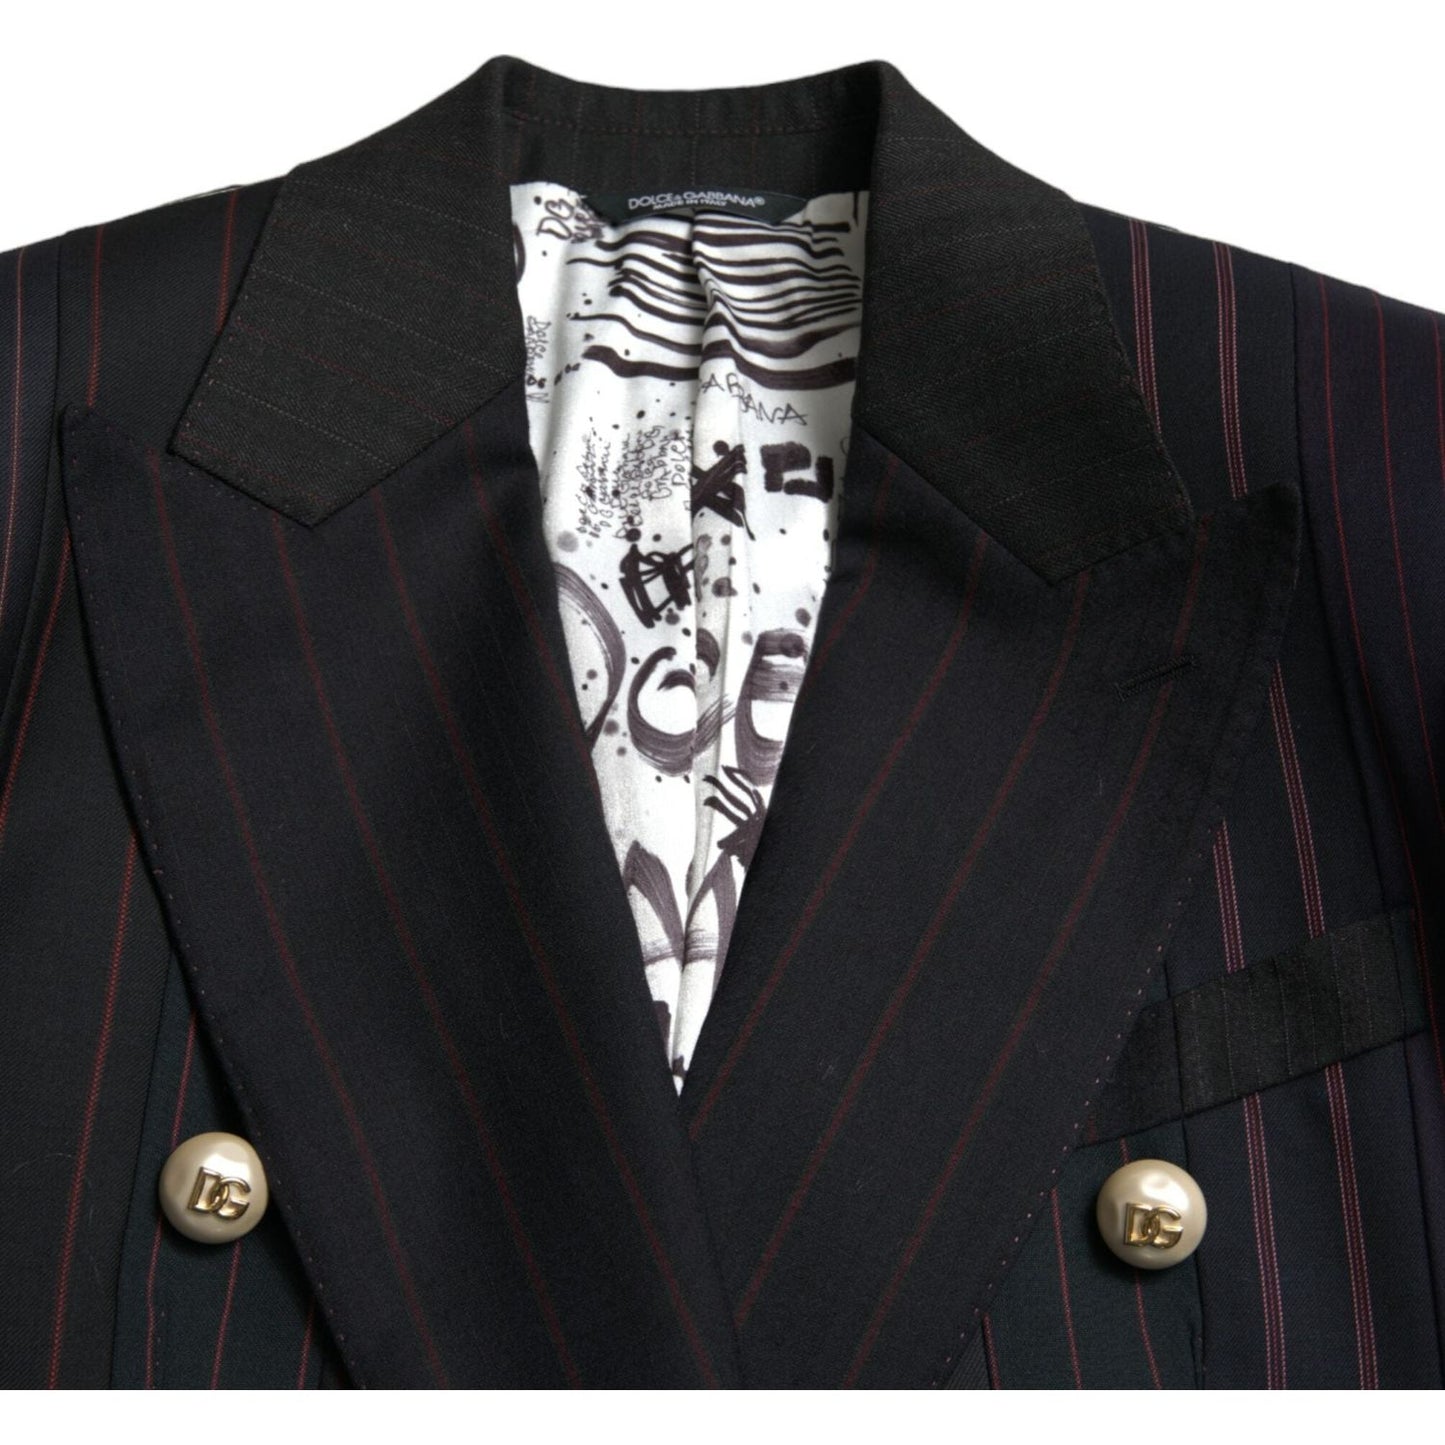 Dolce & Gabbana Elegant Striped Double Breasted Wool Blazer black-striped-sicilia-double-breasted-jacket